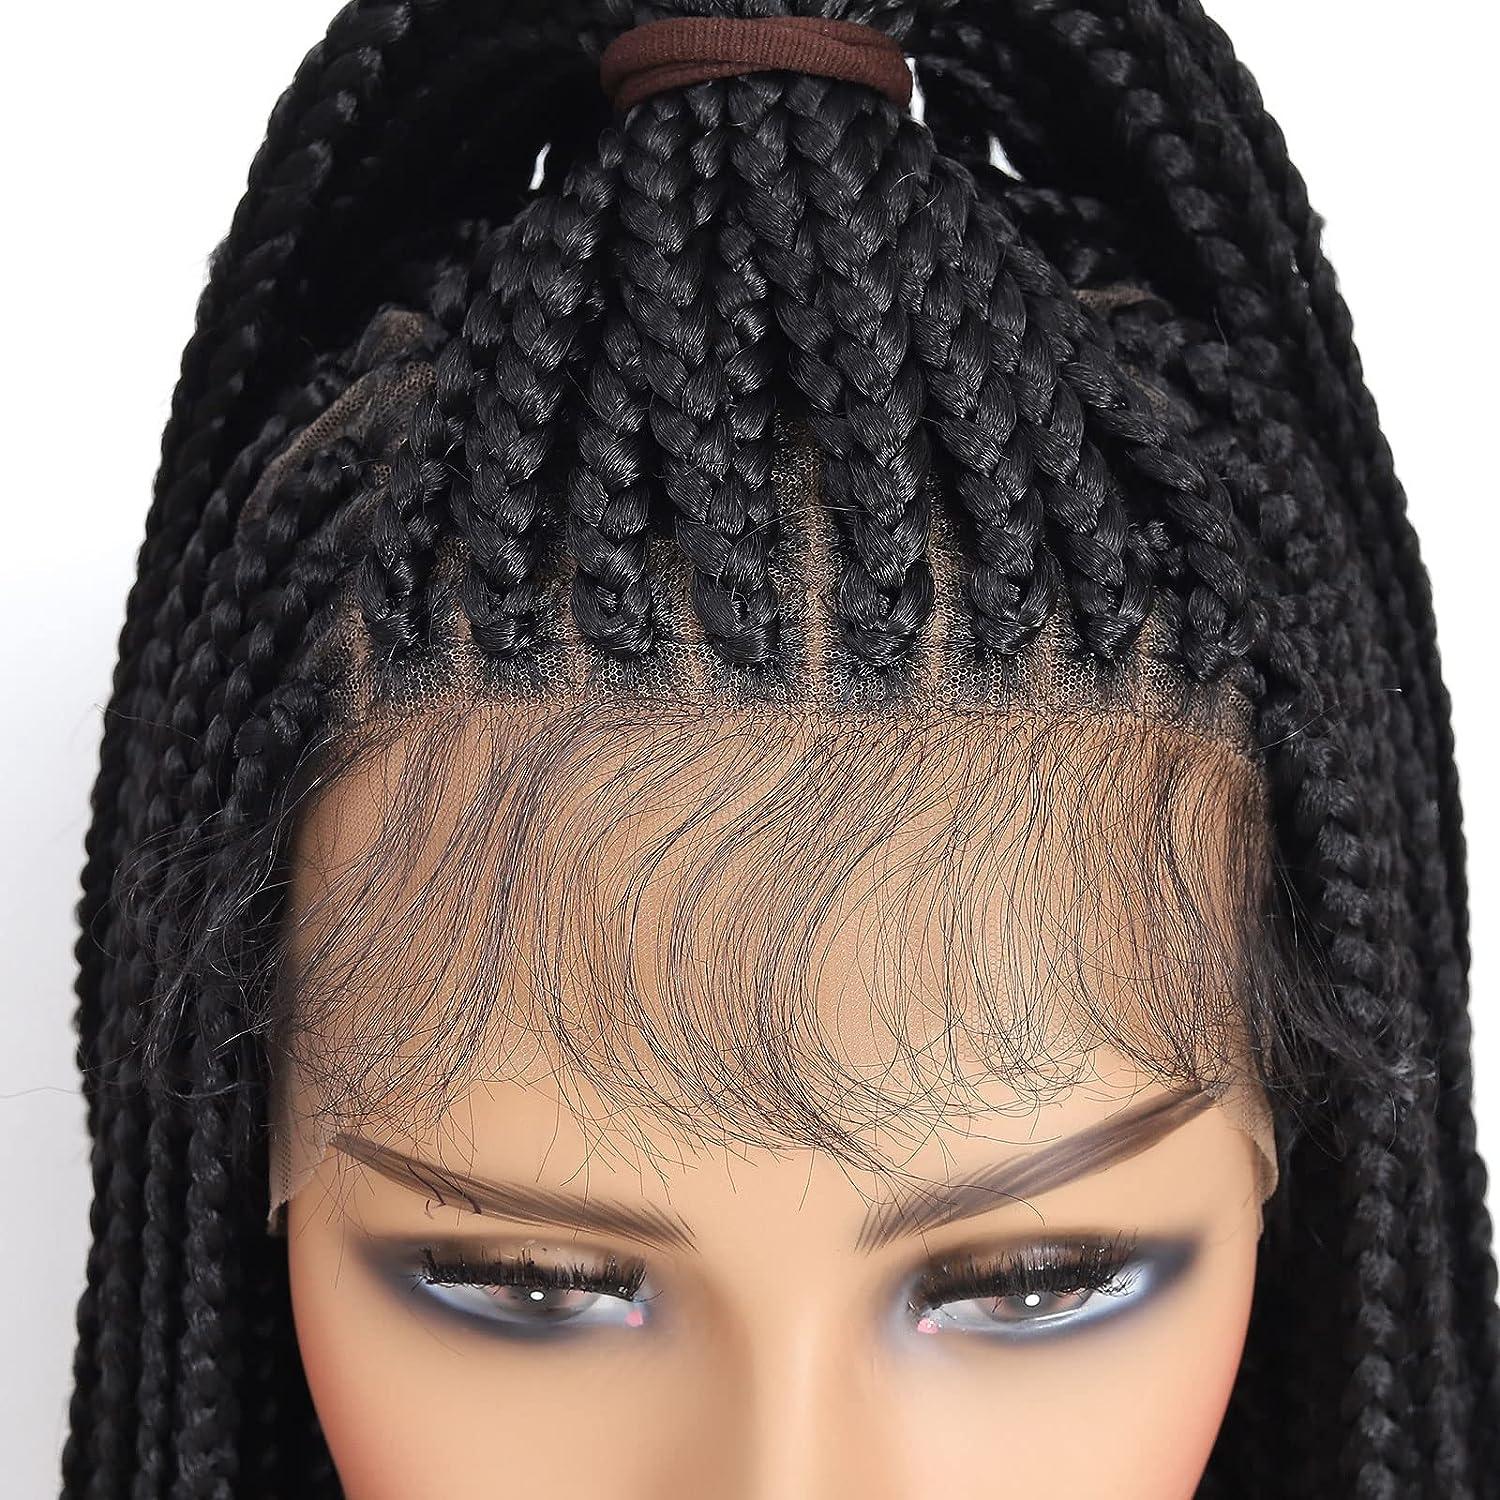 Braided Wigs for Black Women